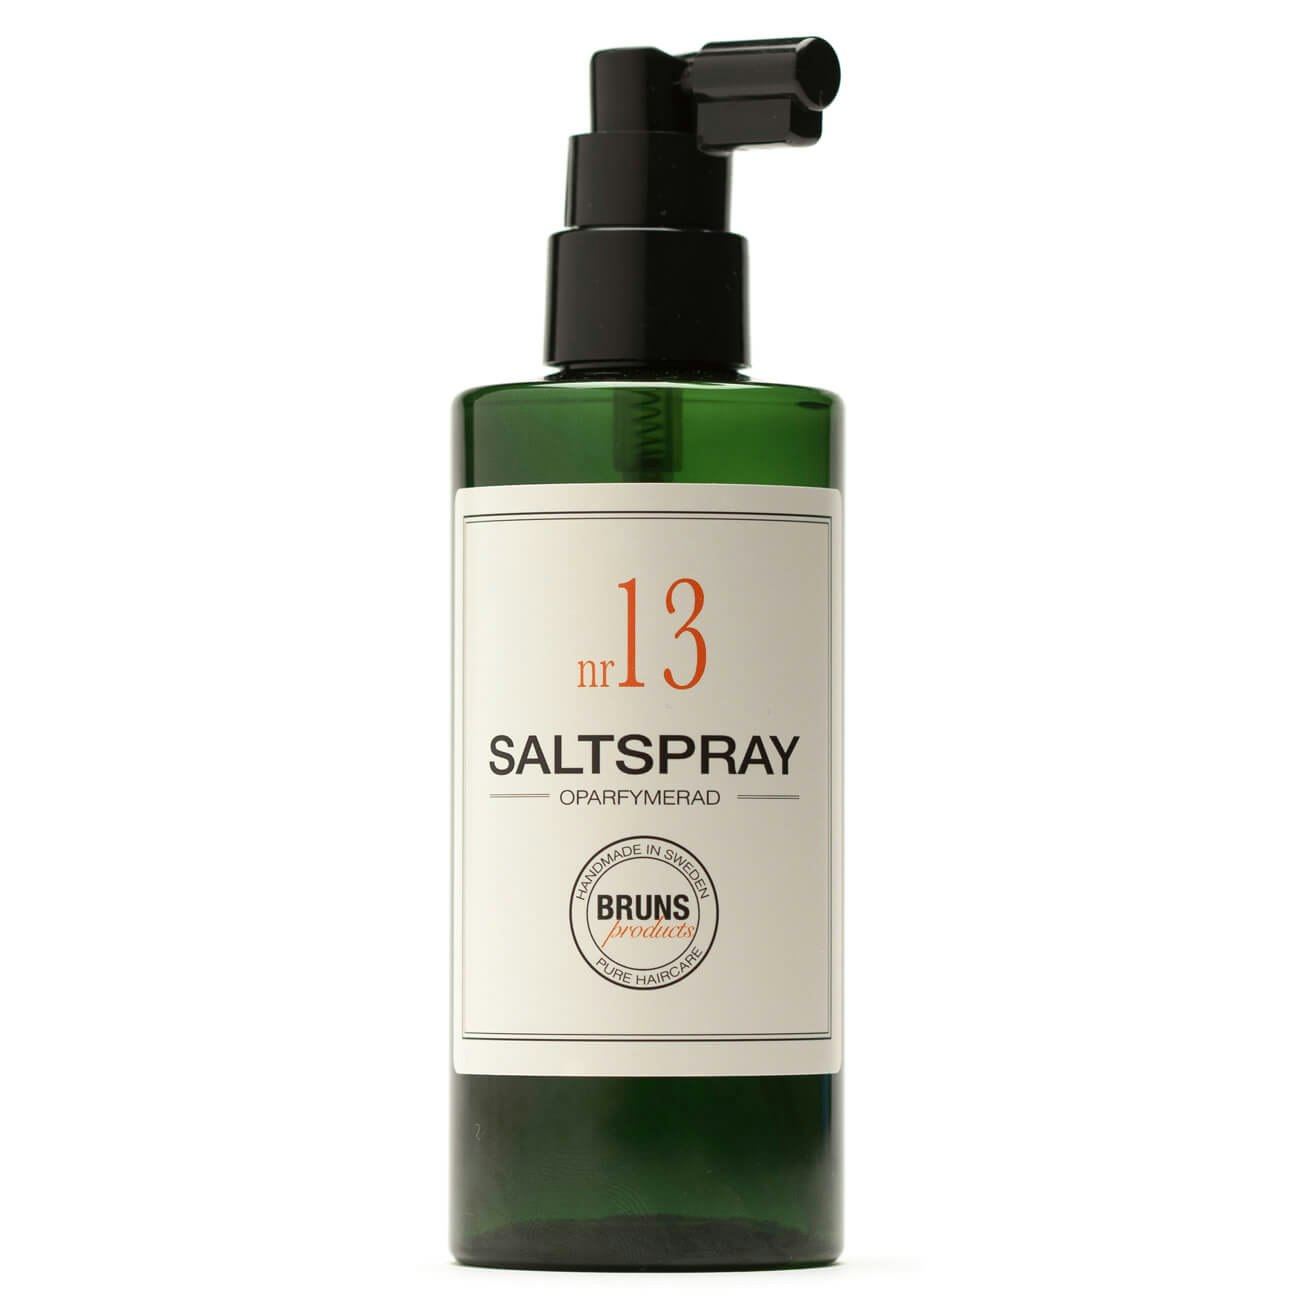 Saltspray nr13 Oparfymerad